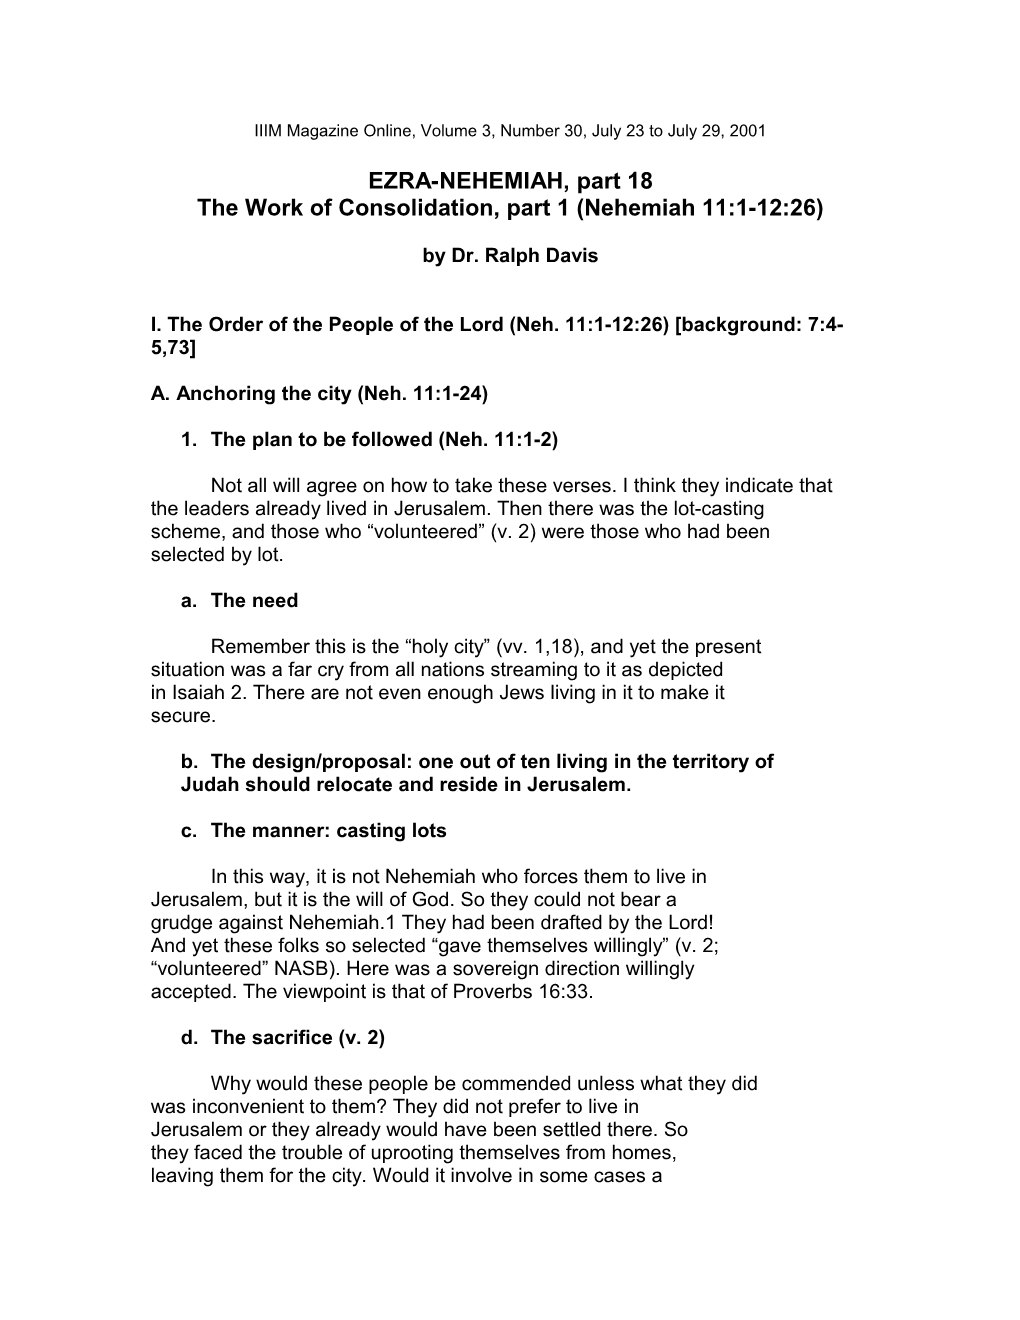 EZRA-NEHEMIAH, Part 18